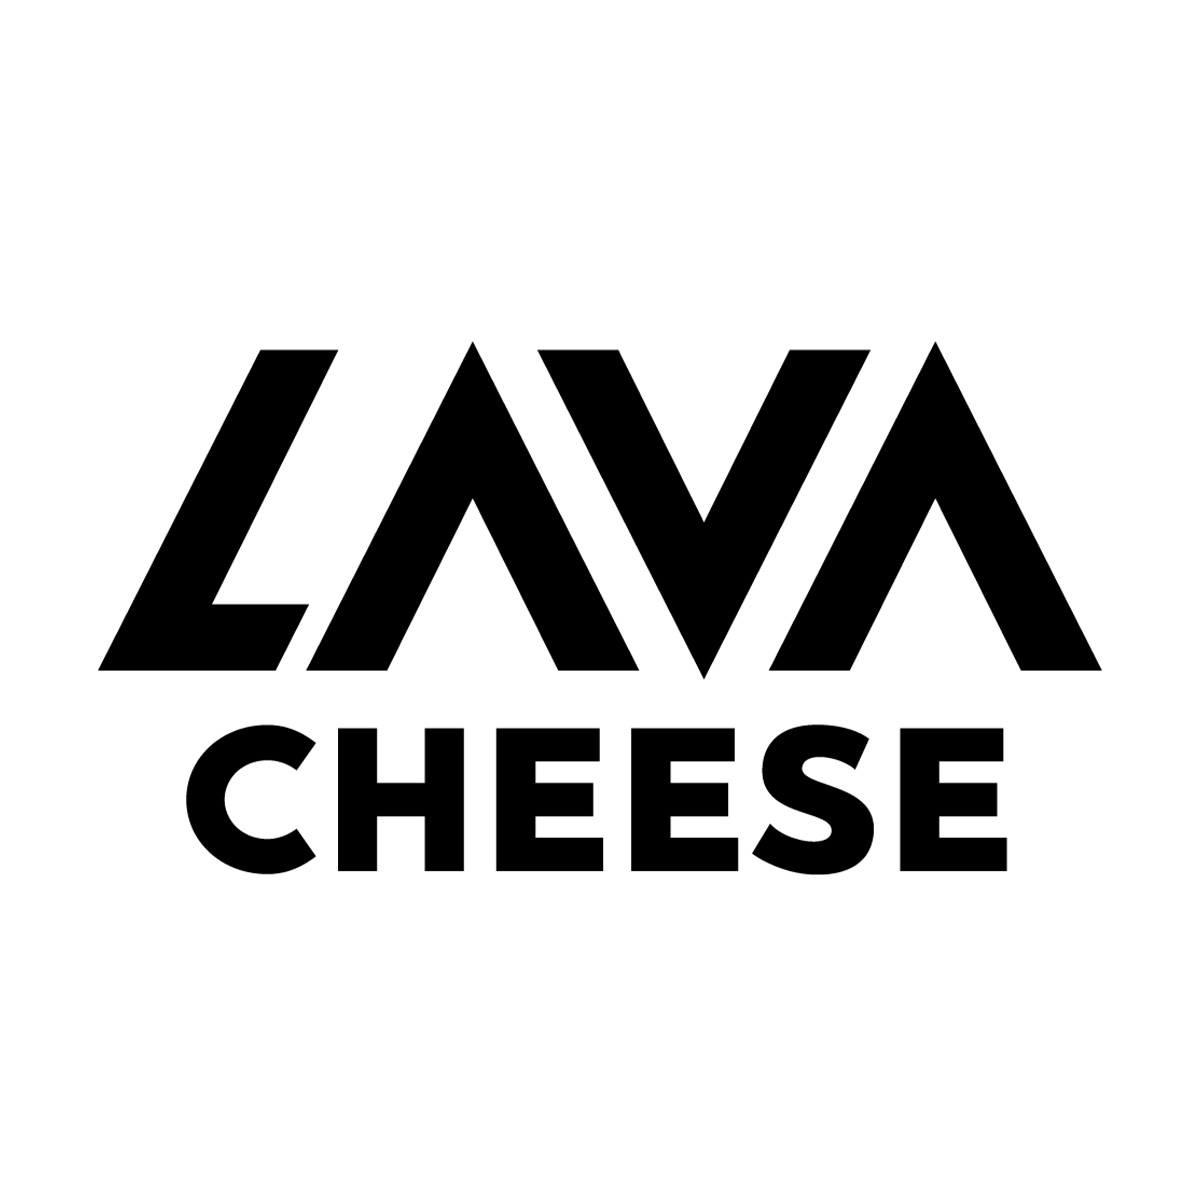 Lava Cheese